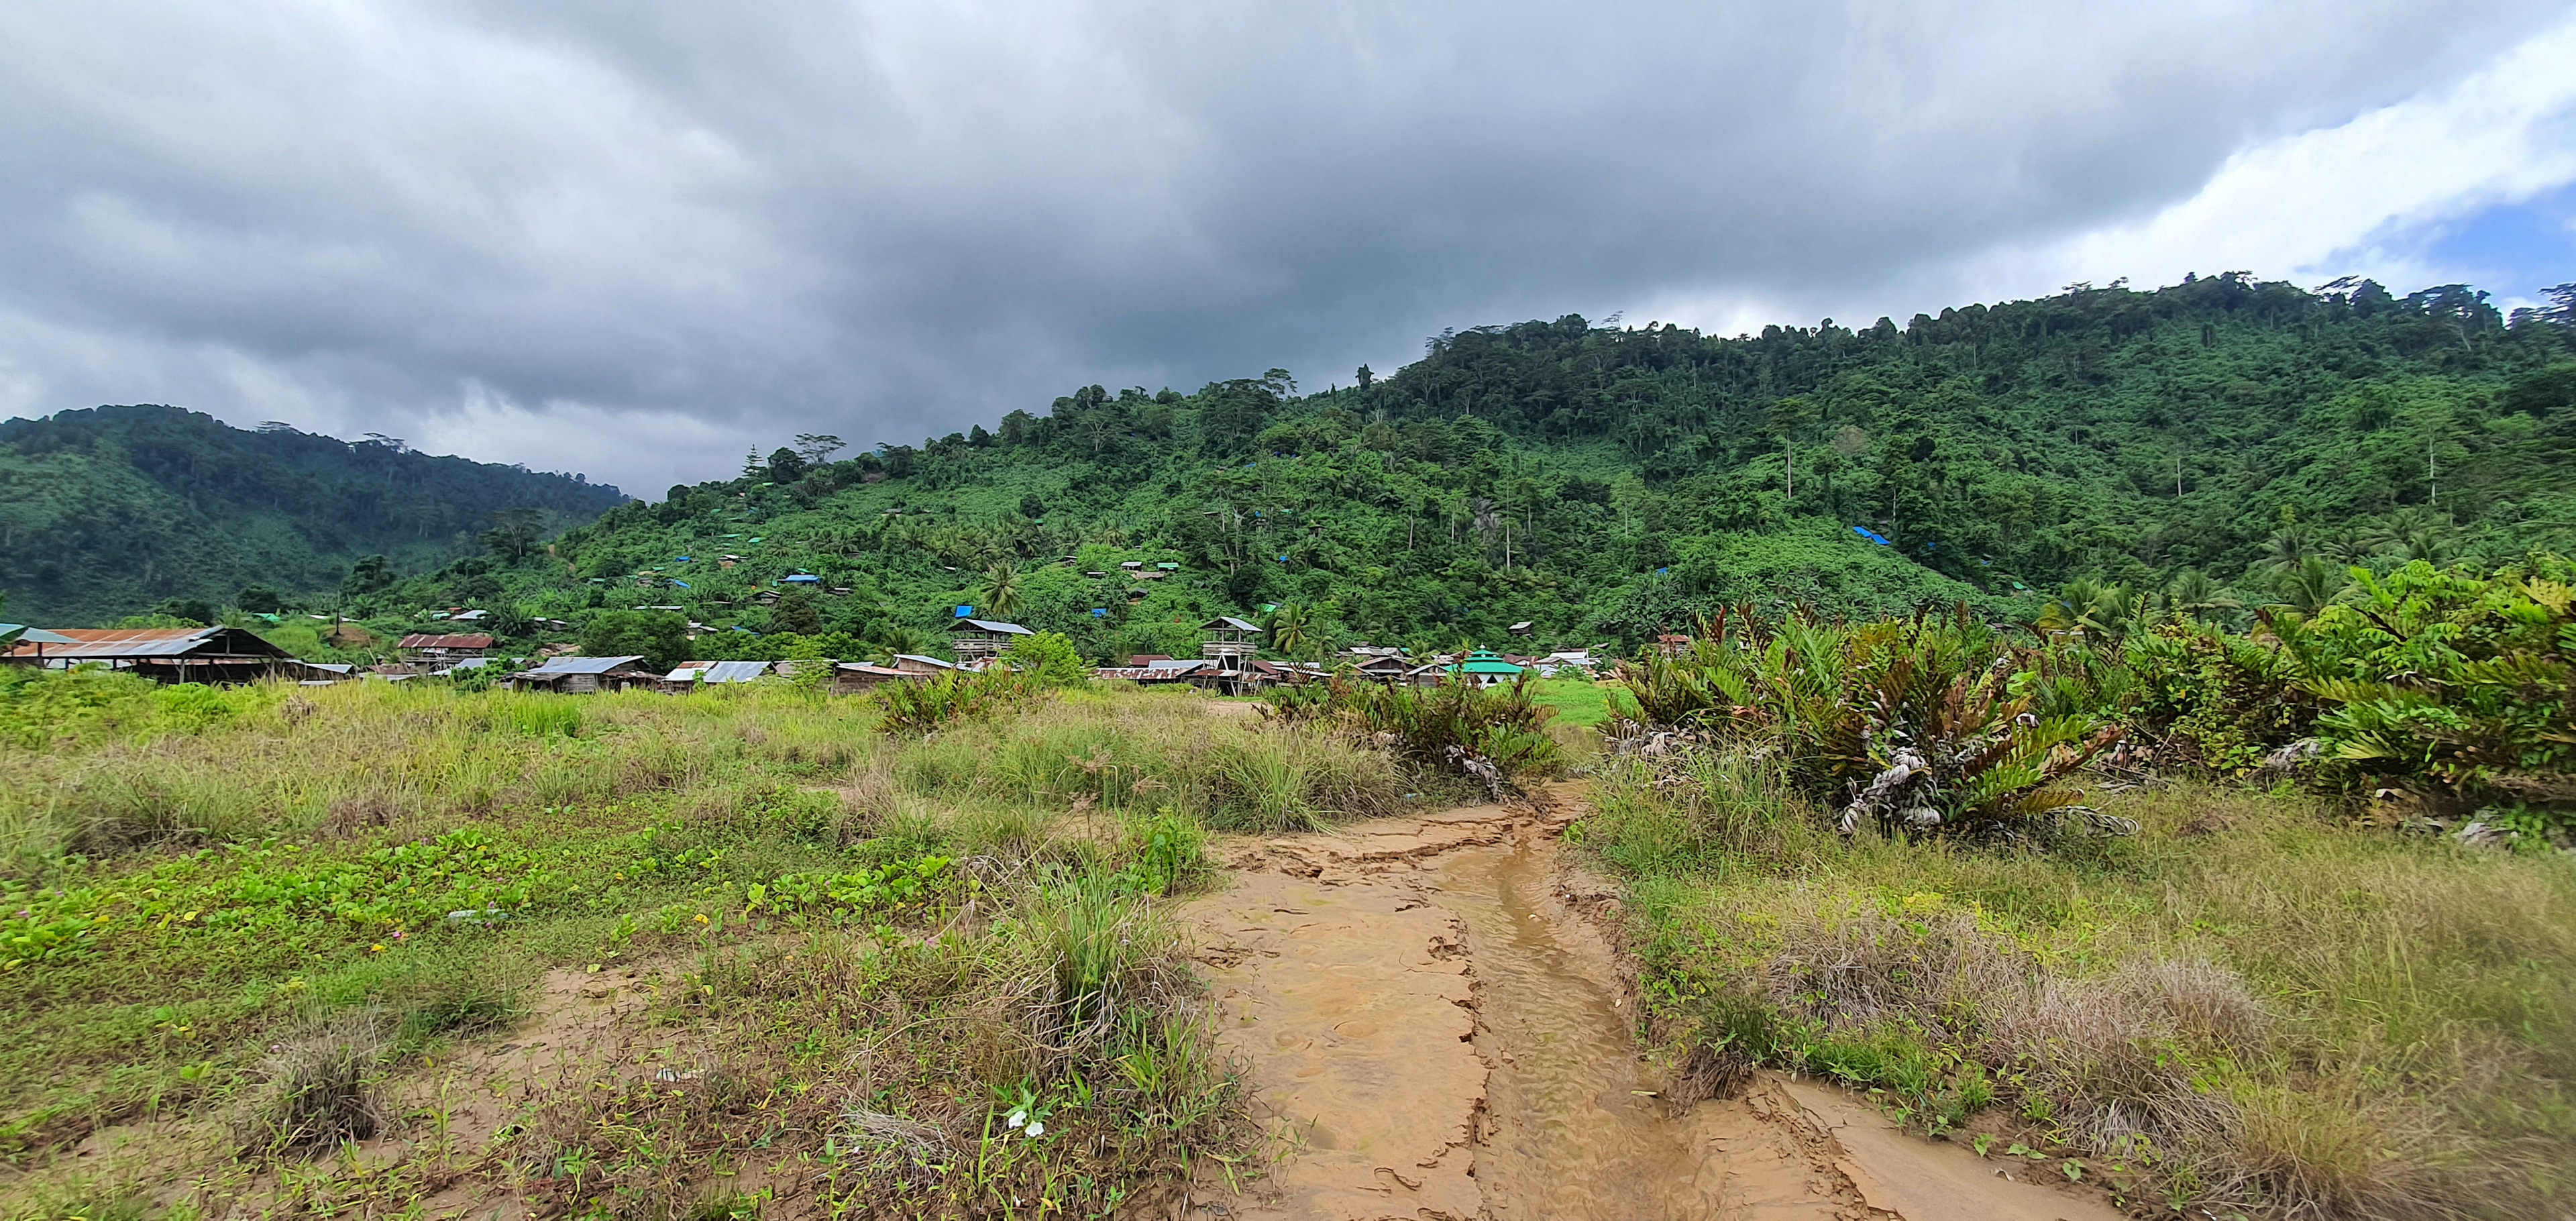 A small-scale gold mining operation in Obi island, Indonesia. Photo: SN Marliana.